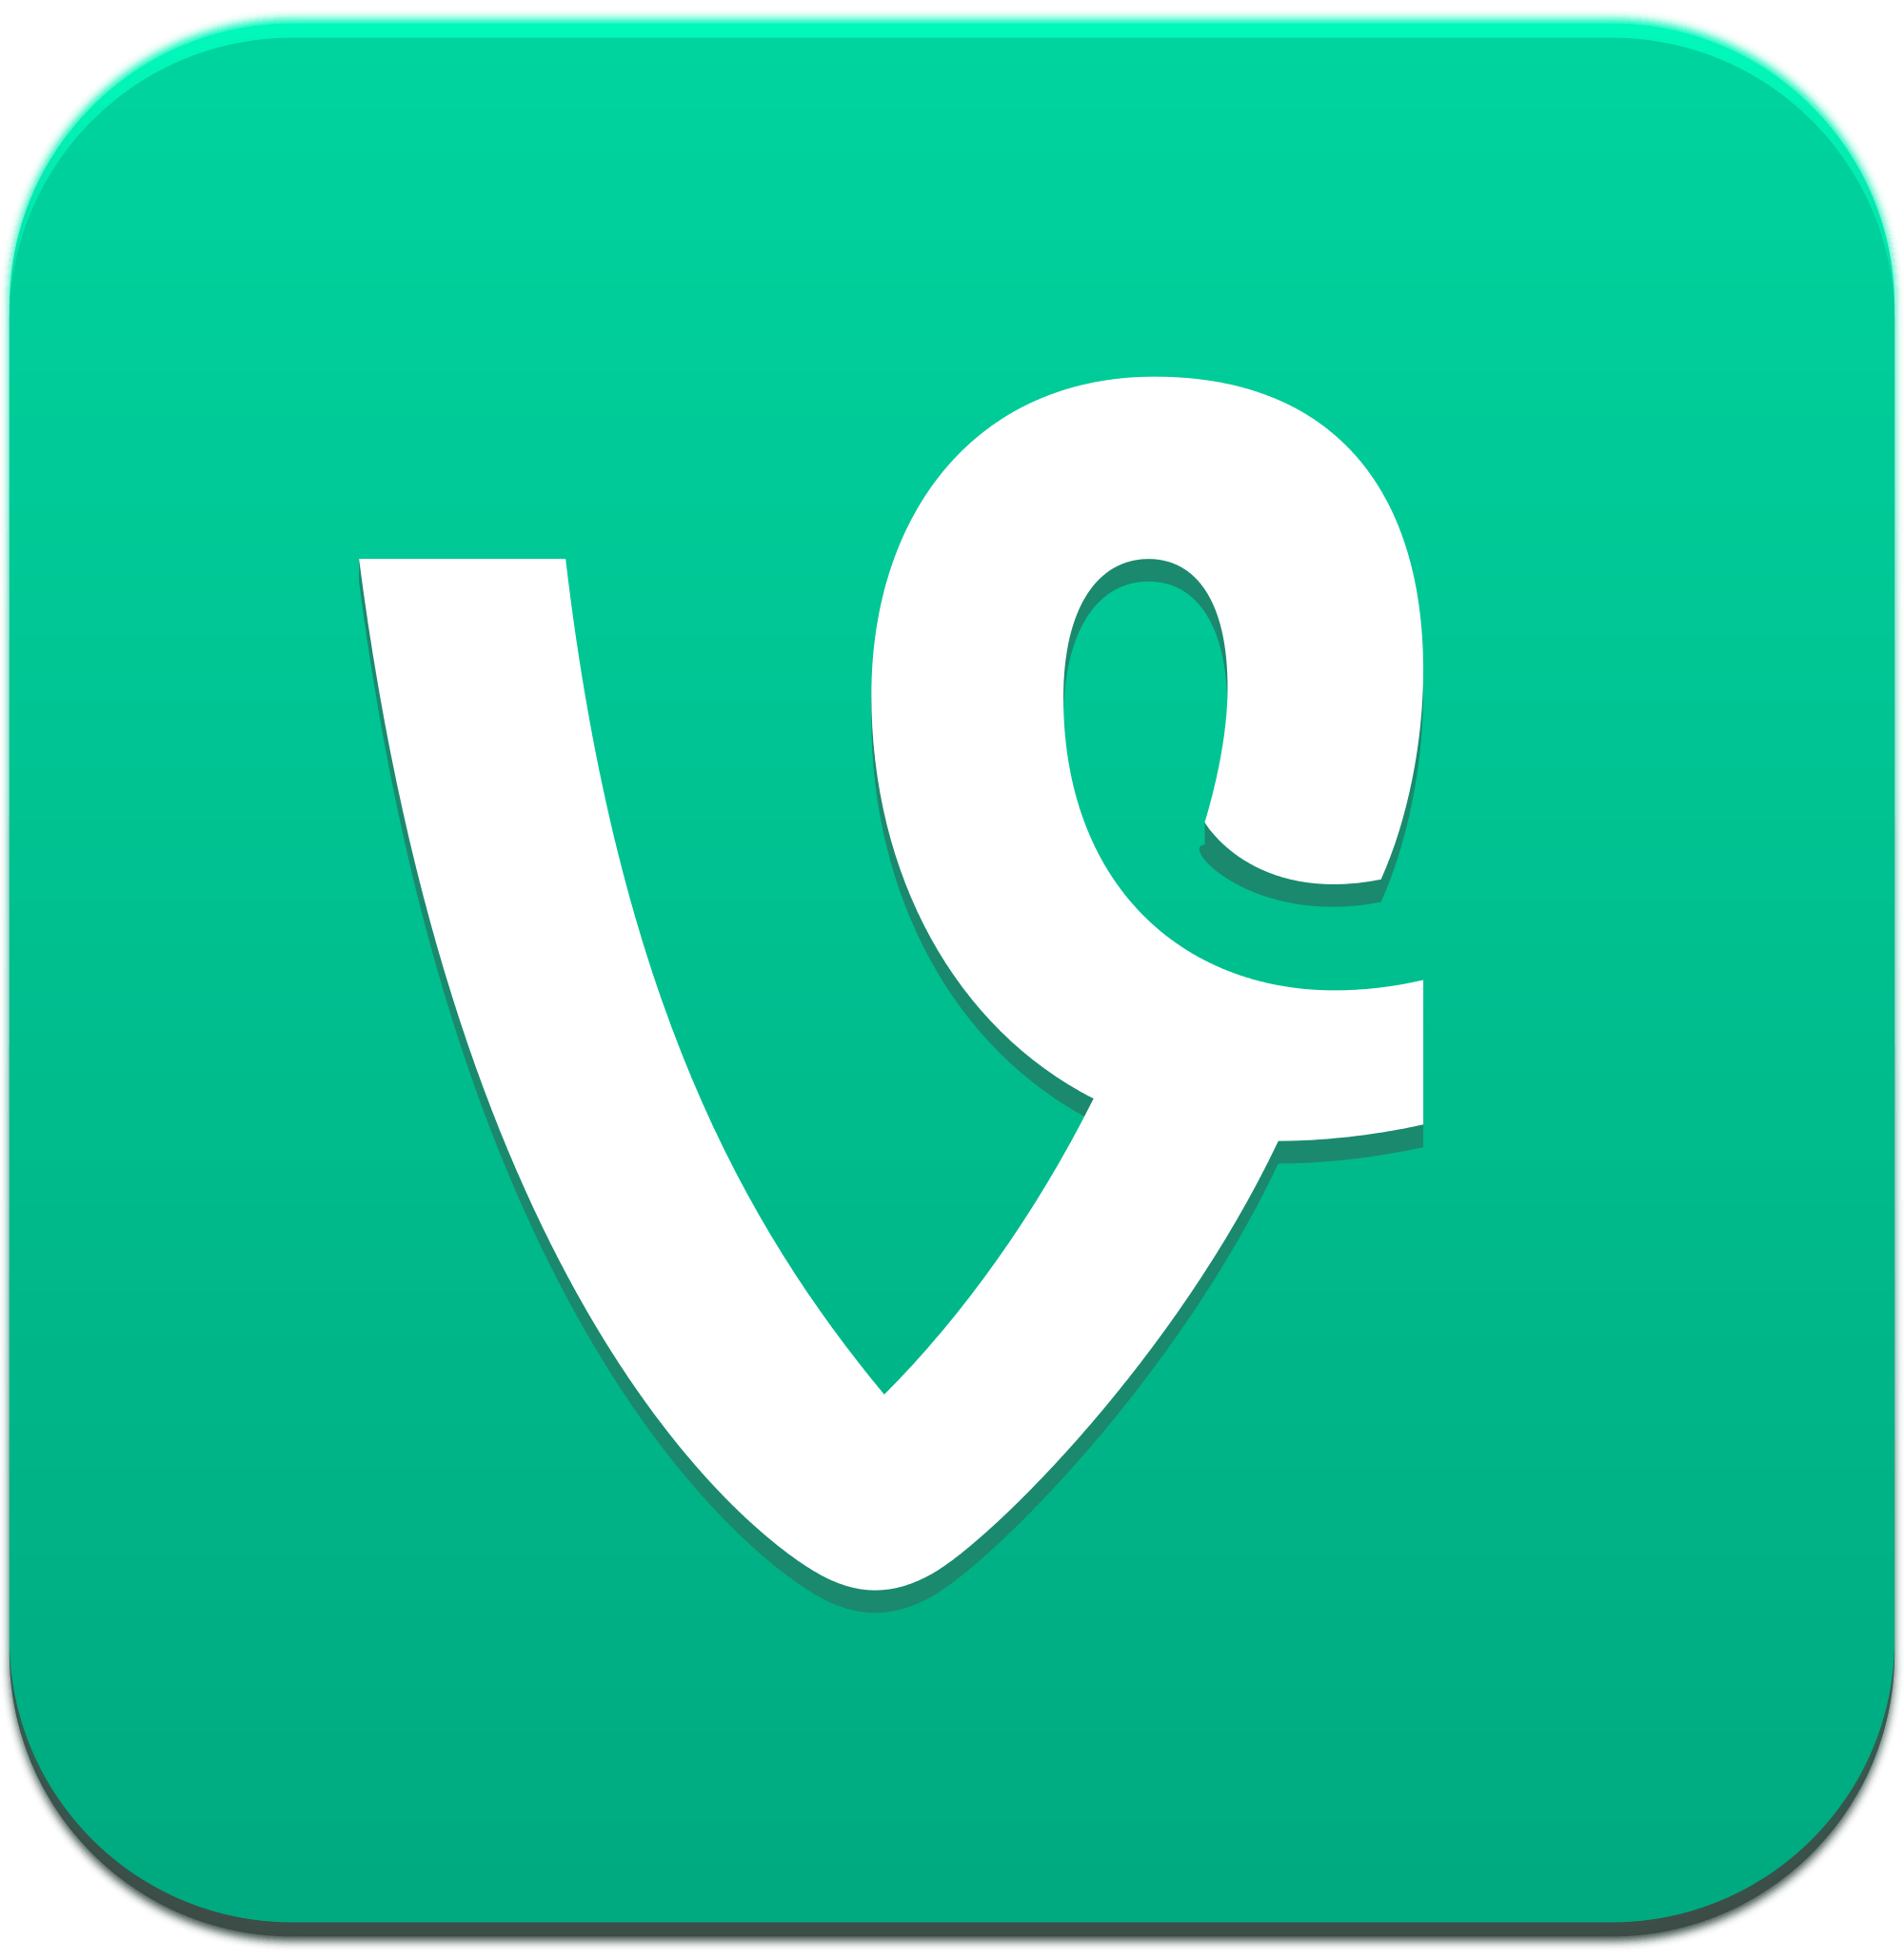 Vine Logo - File:Vine logo.svg - Wikimedia Commons